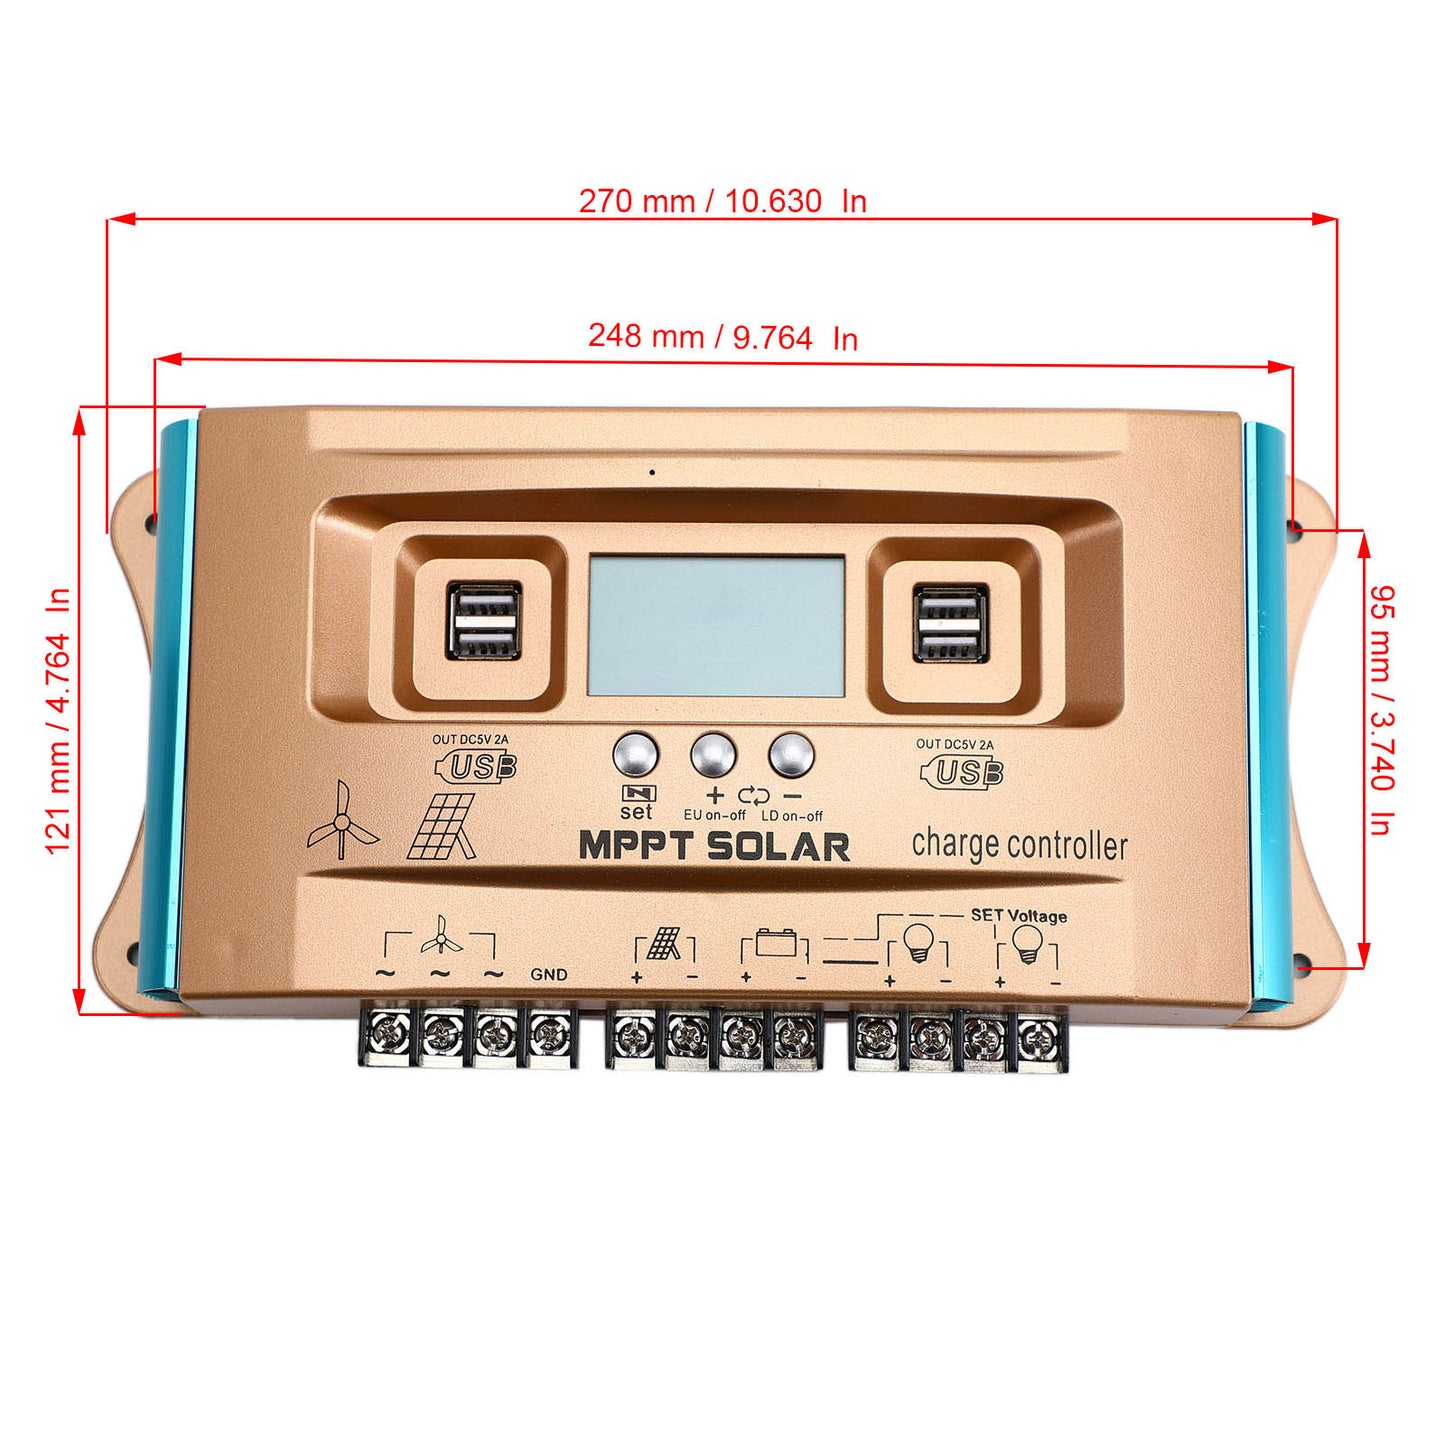 12V-60V 30A/60A/100A MPPT Wind Solar Hybrid Laderegler Controller Panel Dual USB